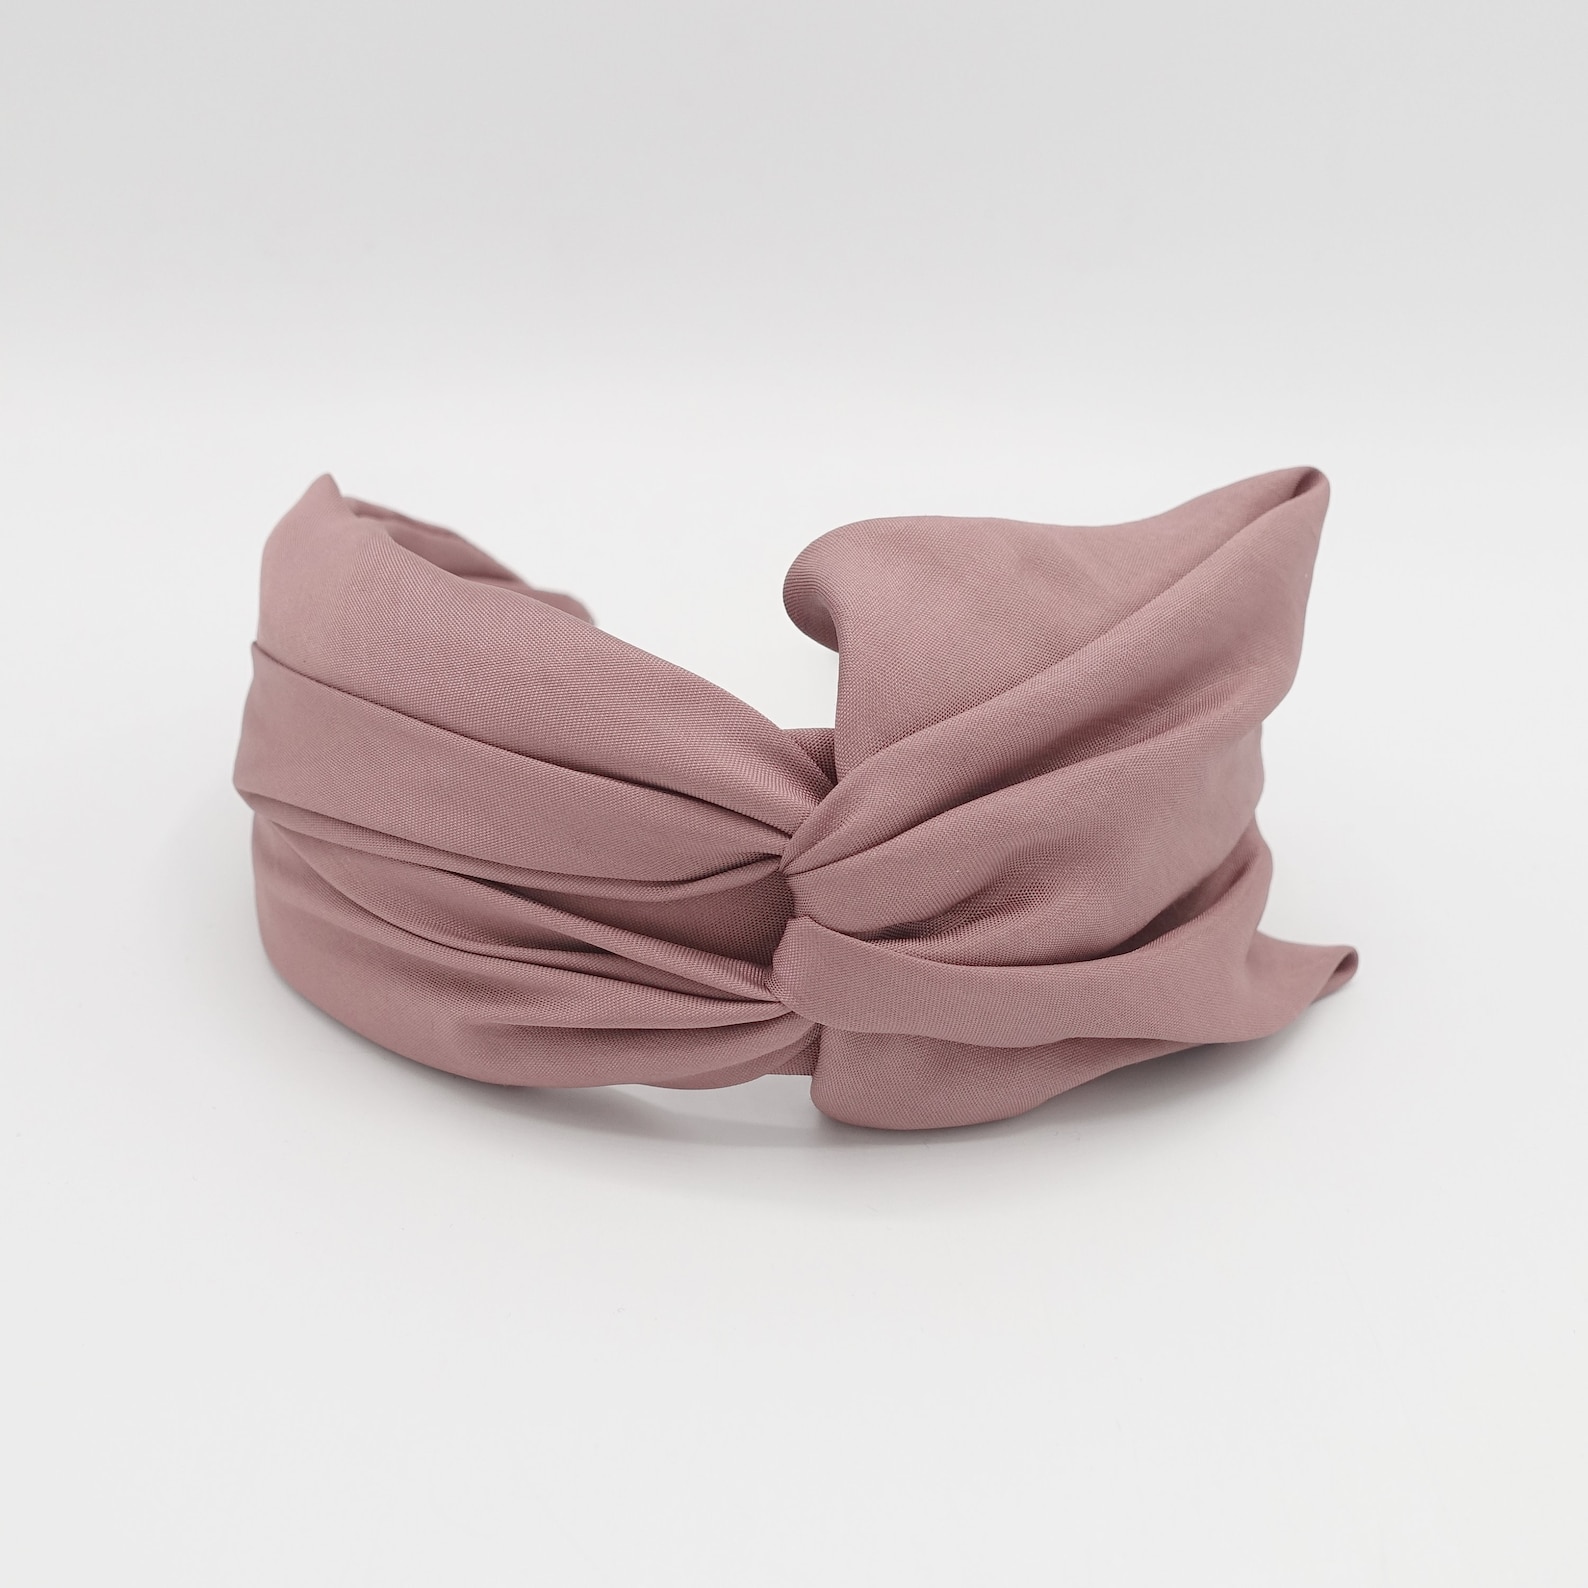 Cross headband asymmetric hairband for women | Etsy